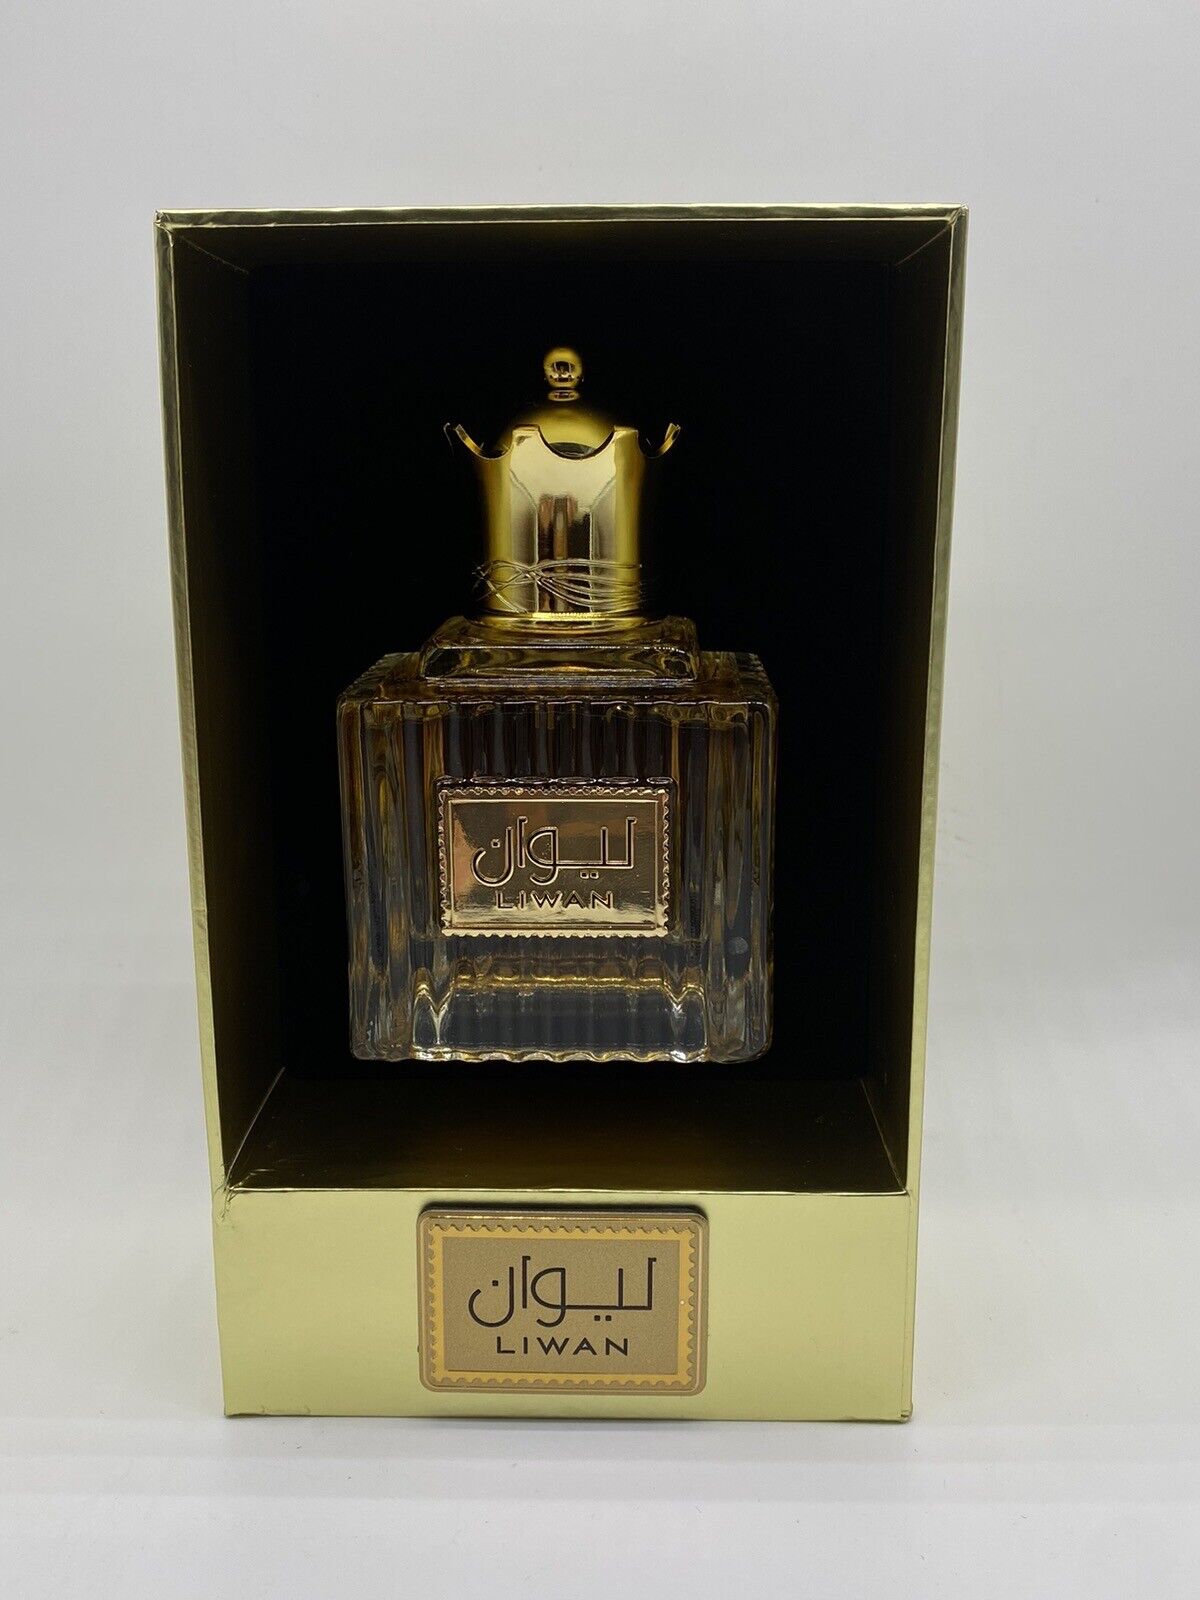 Ard Al Zaafaran Liwan Eau De Perfume By Ard Al Zaafaran 100 ML - NEWEST RELEASE